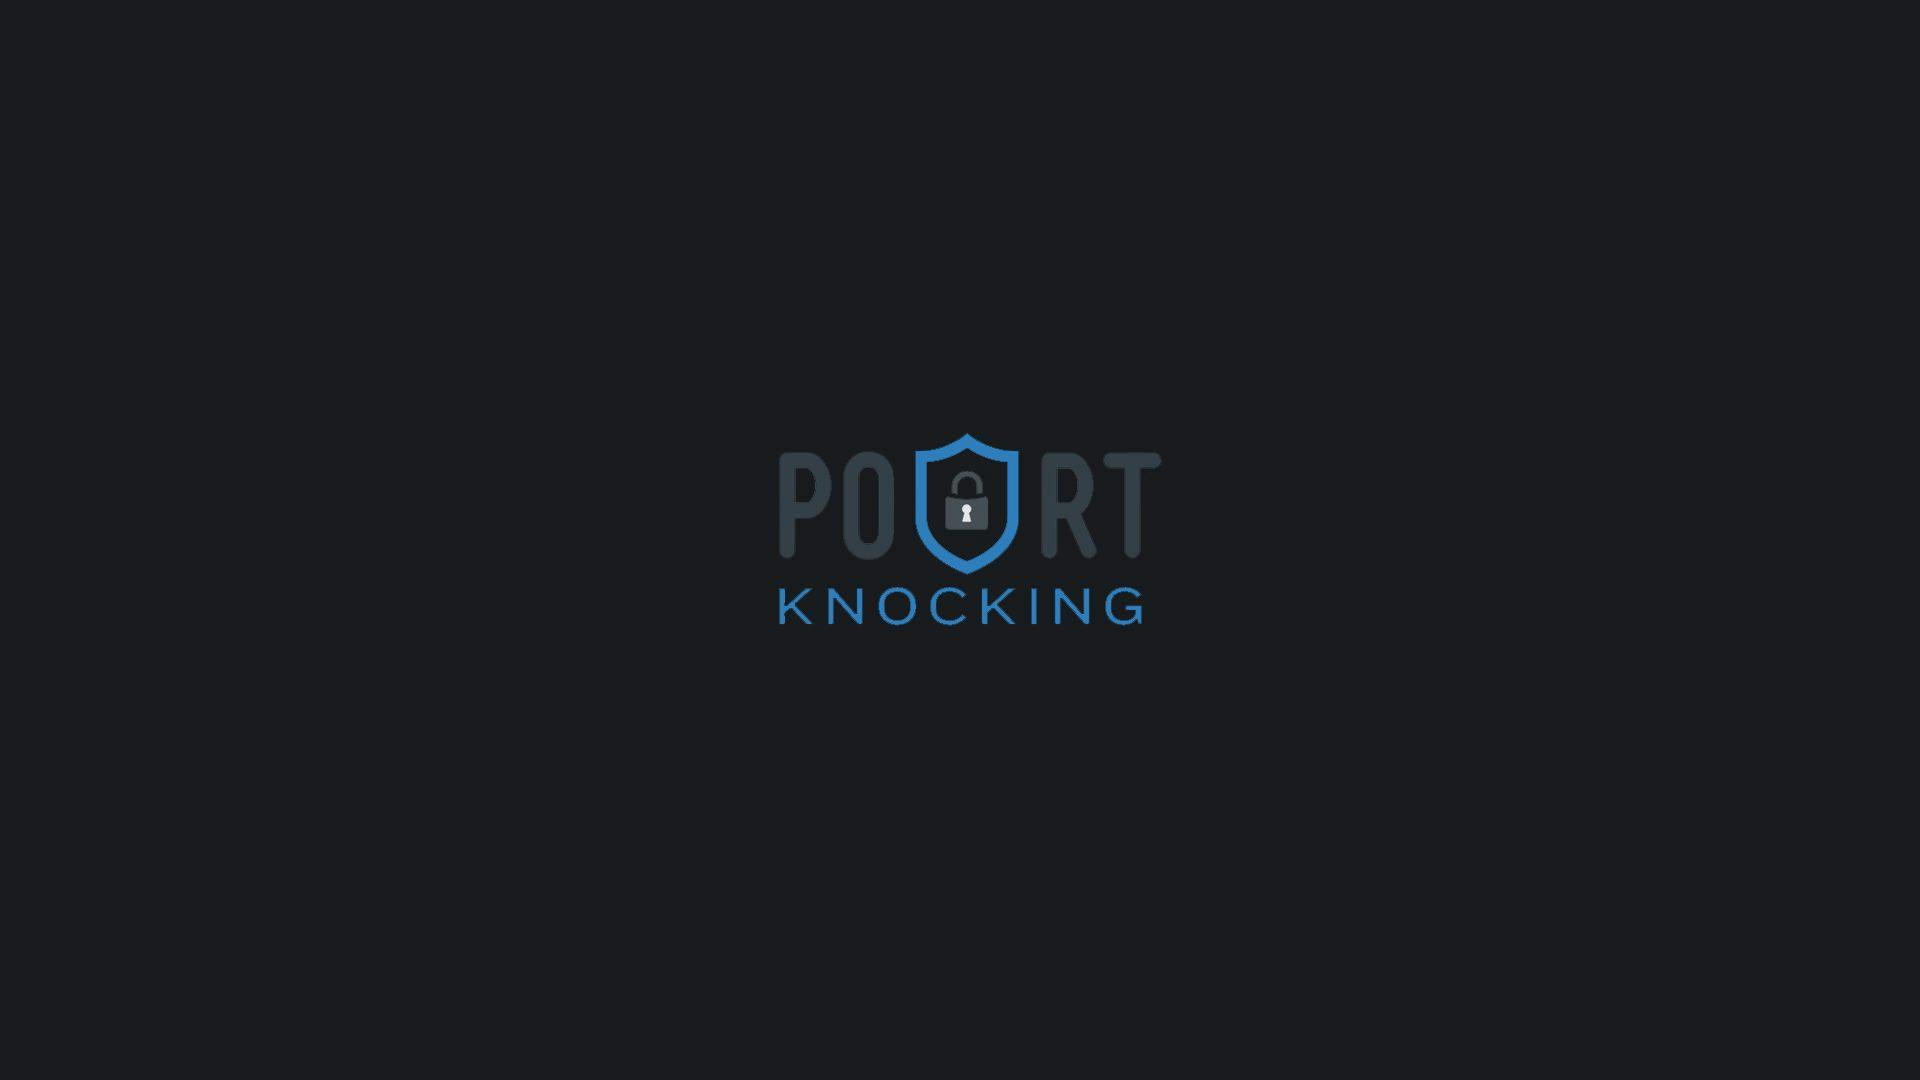 Port Knocking